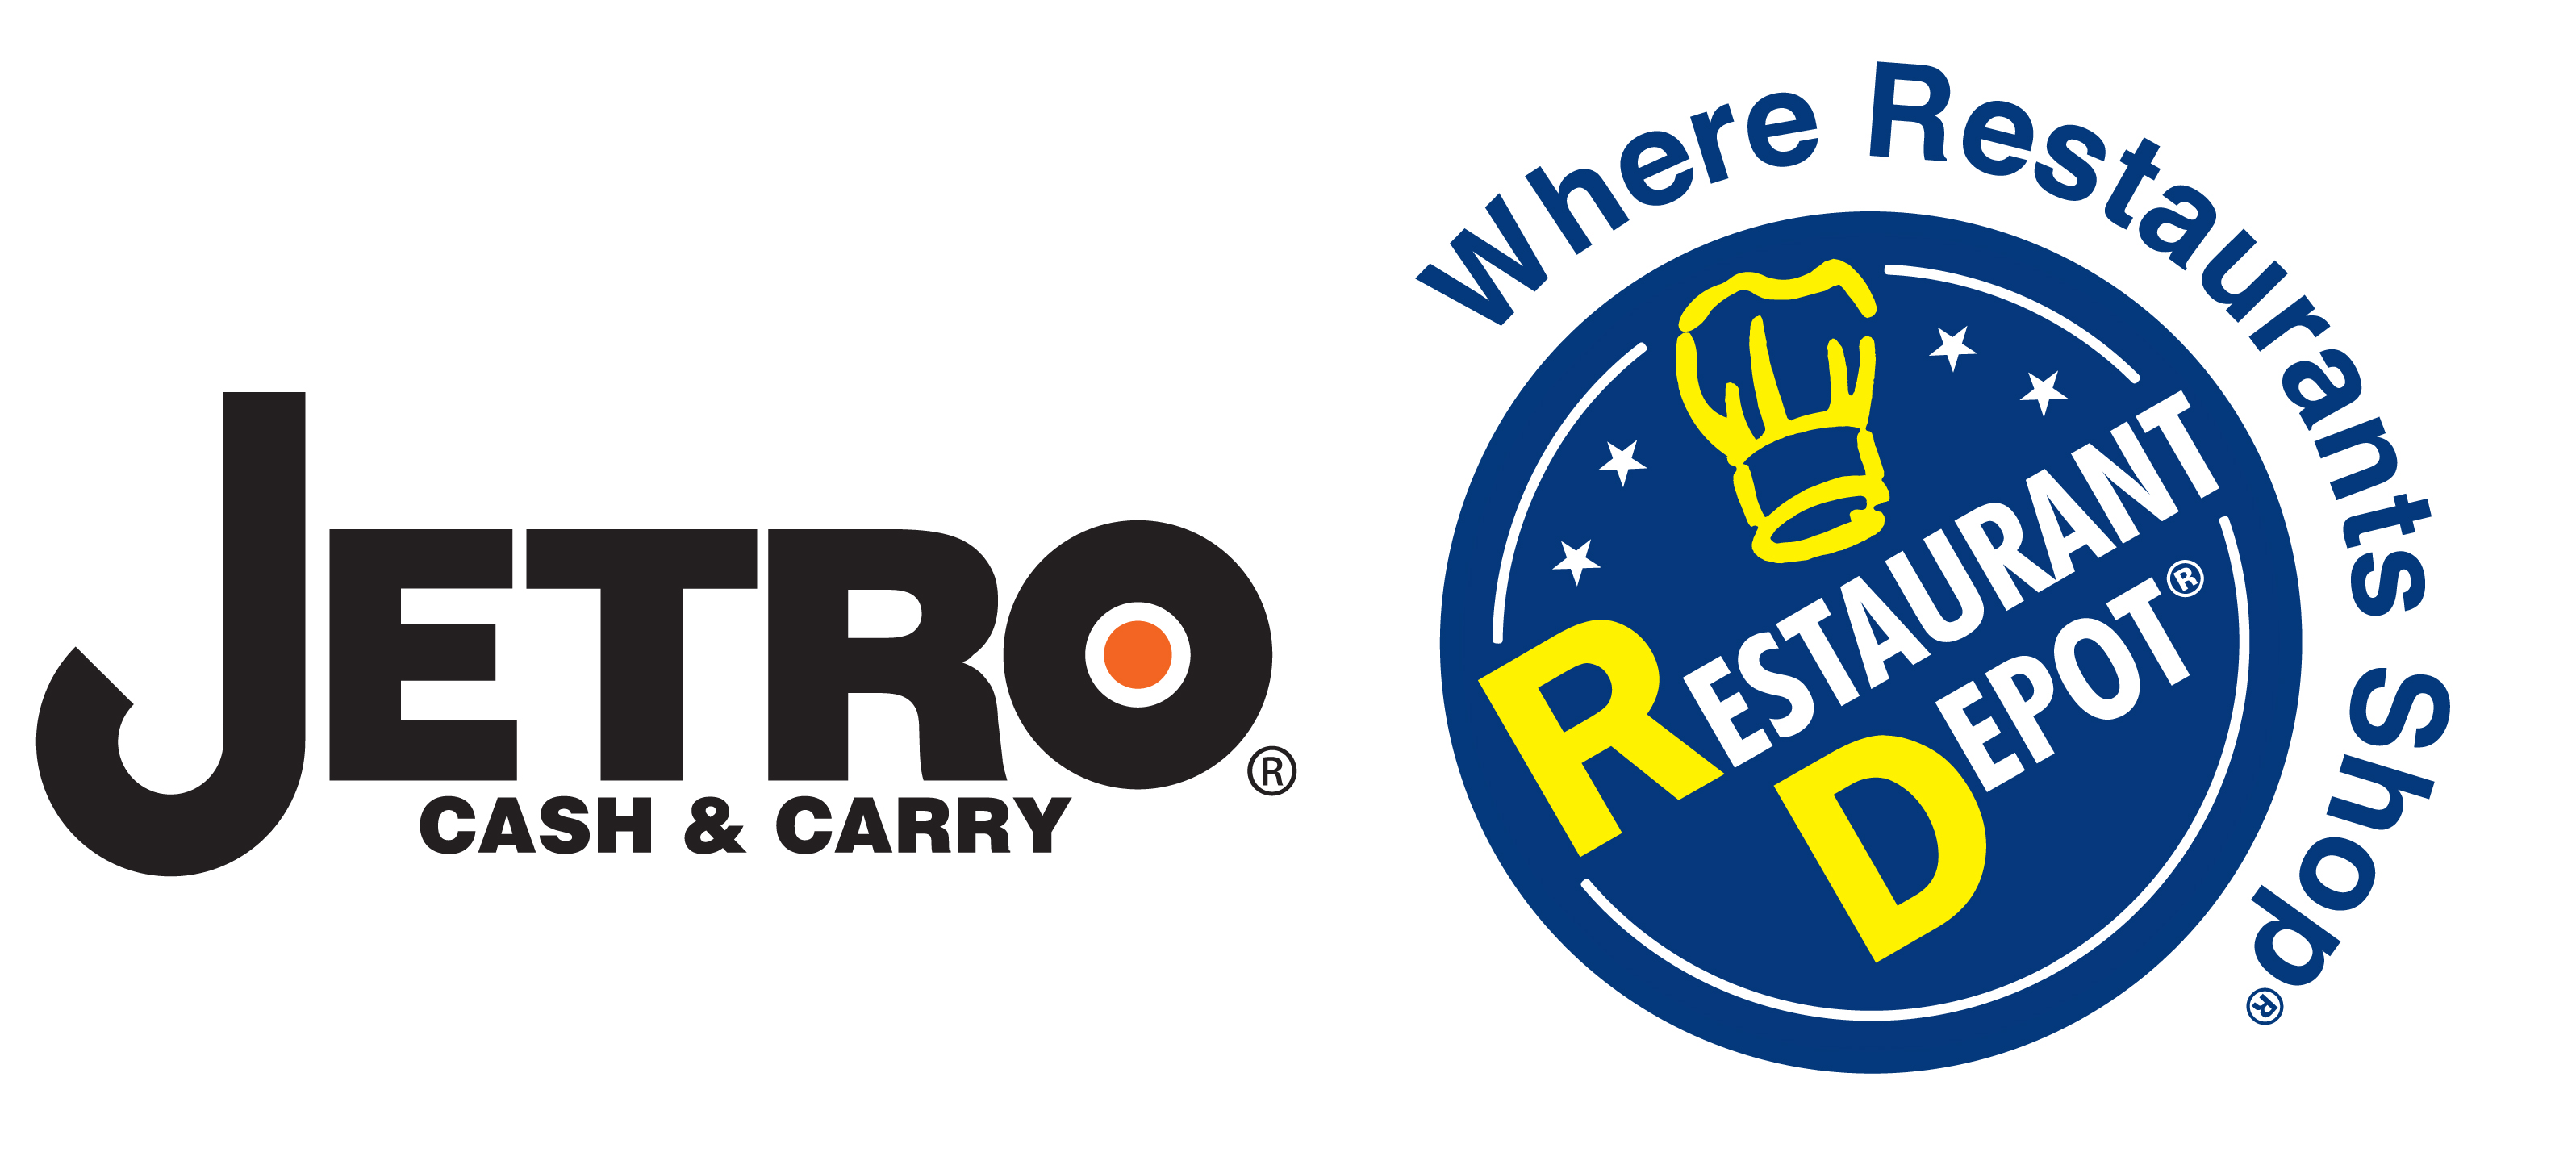 Jetro and Restaurant Depot logos